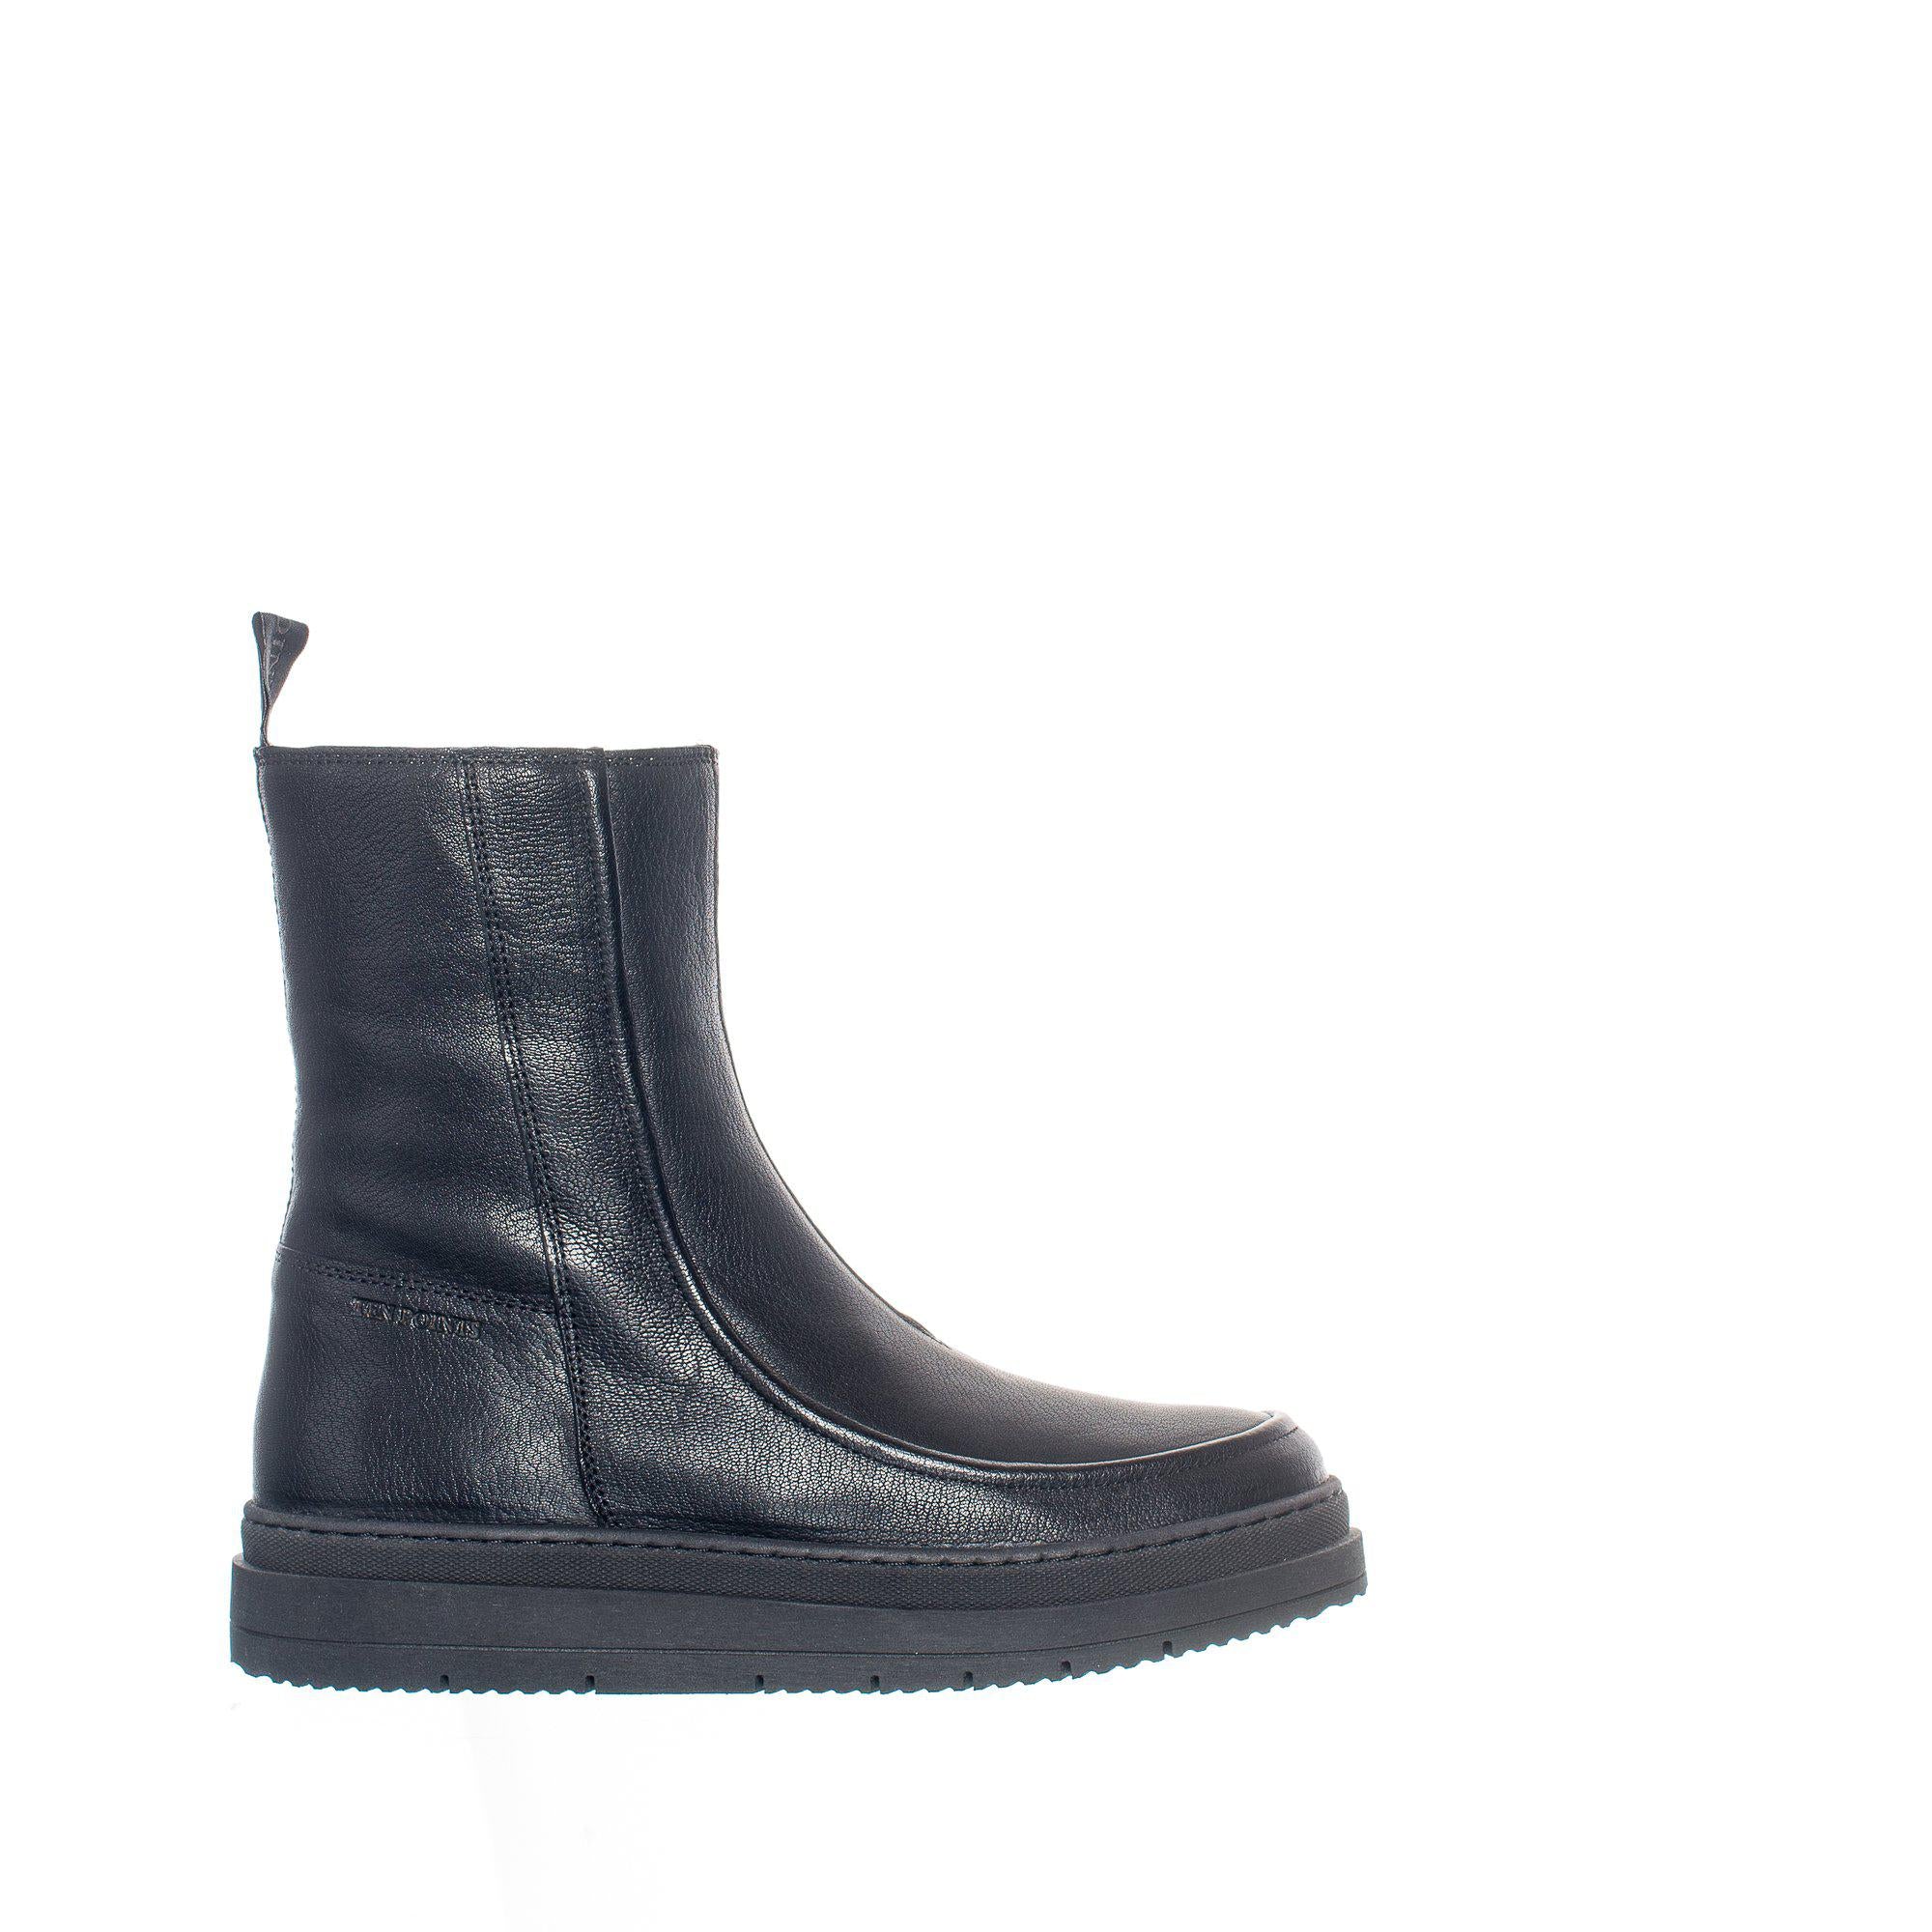 Larina Warm boots — Black | Ten Points AB | Reviews on Judge.me